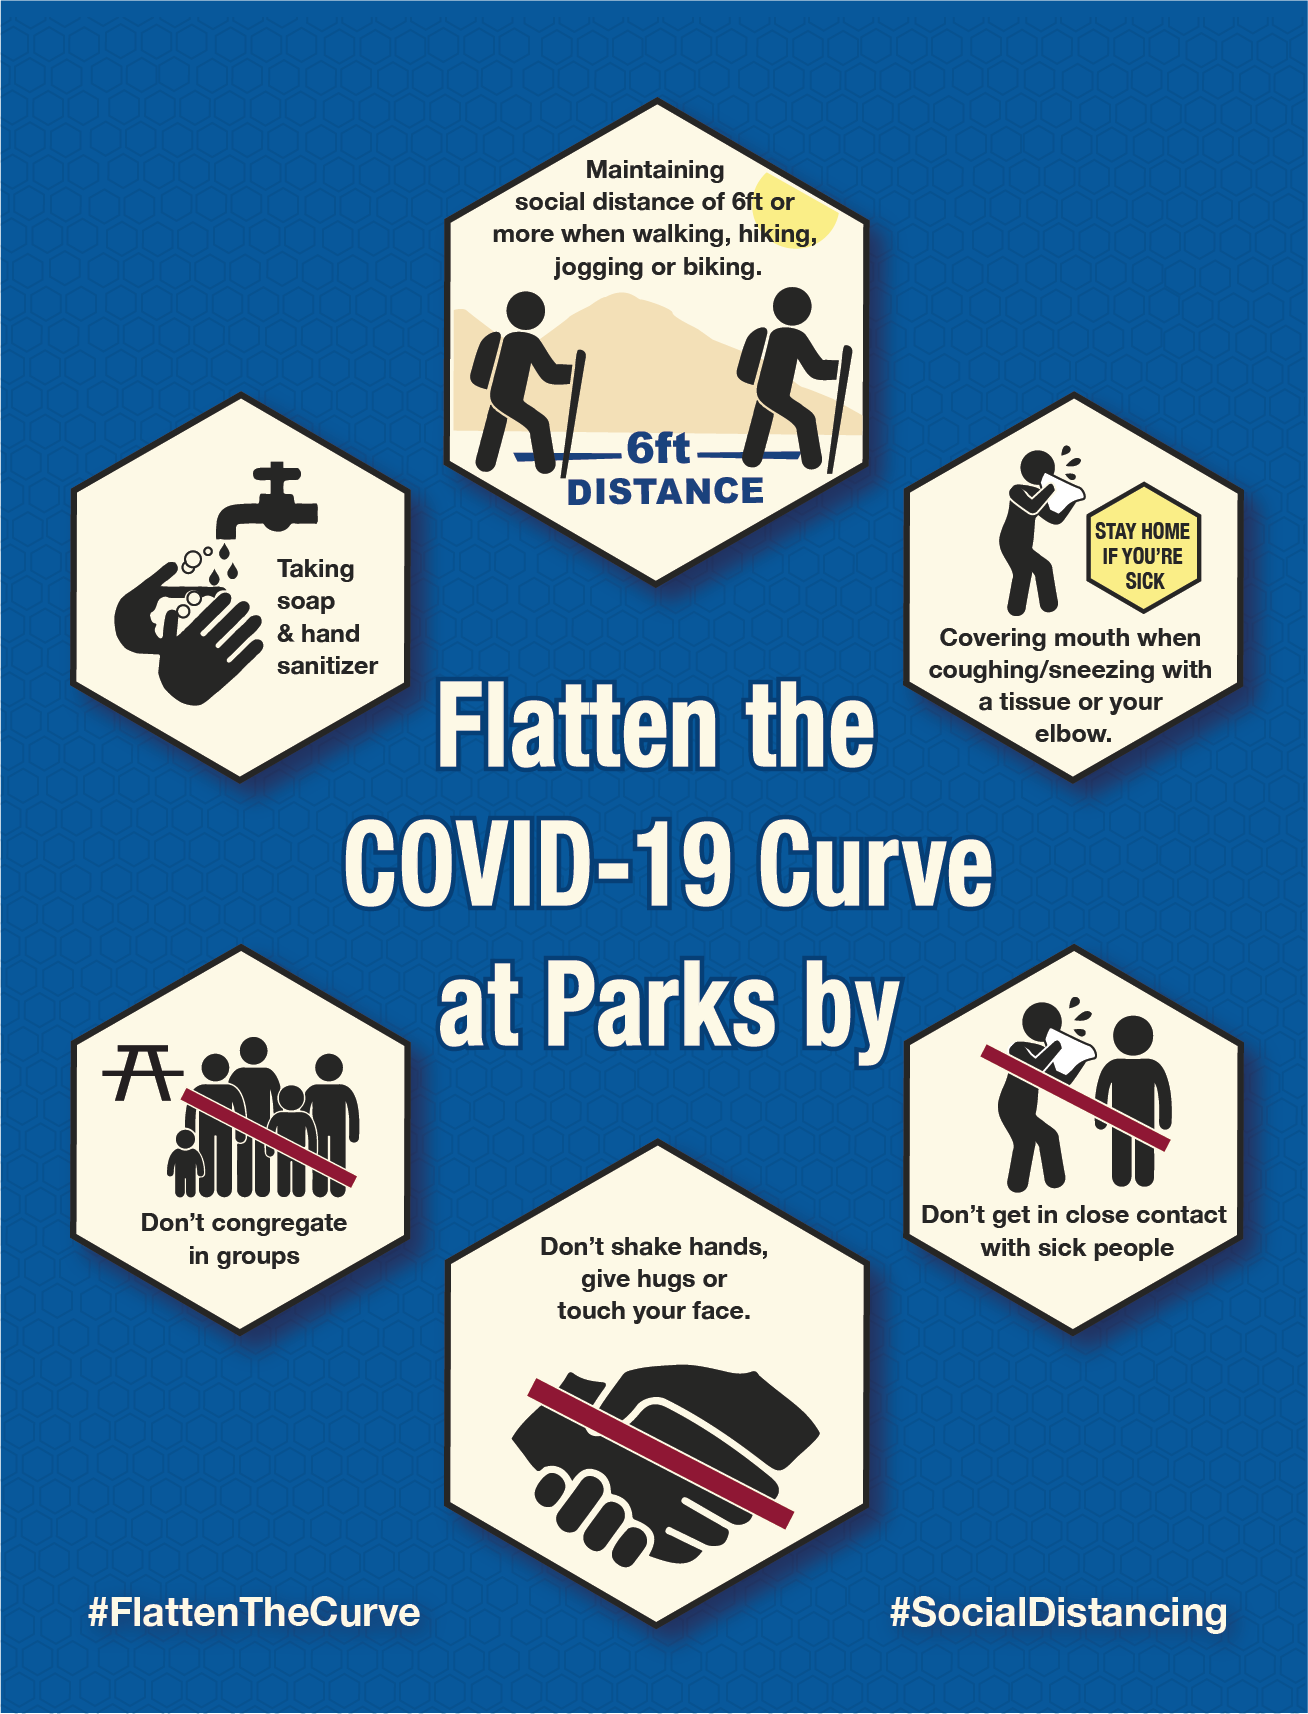 Flatten the COVID-19 Curve imagn